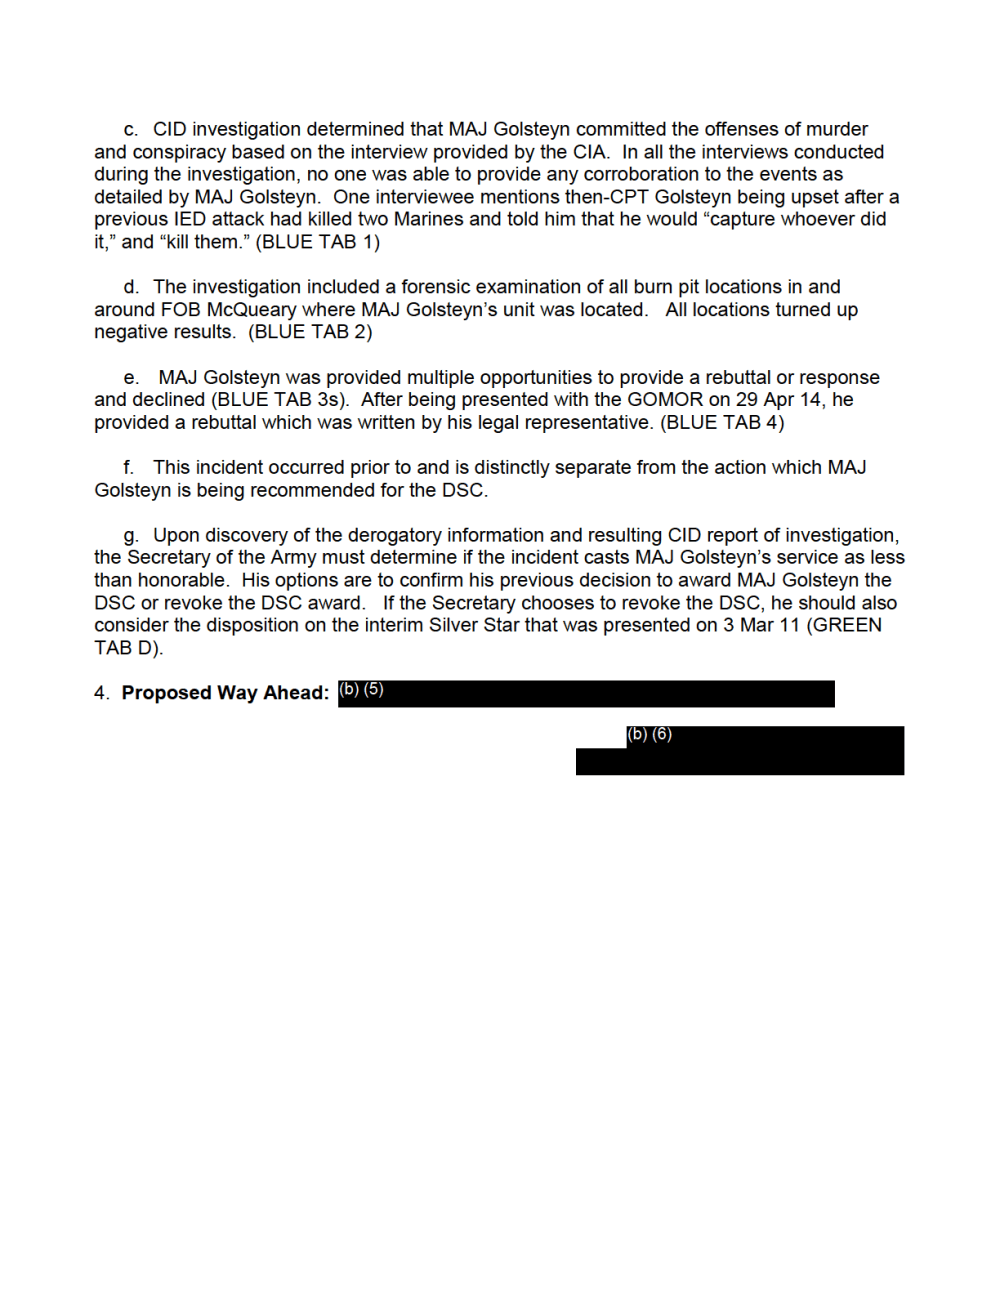 Page 2 from U.S. Army Documents on Major Mathew Golsteyn